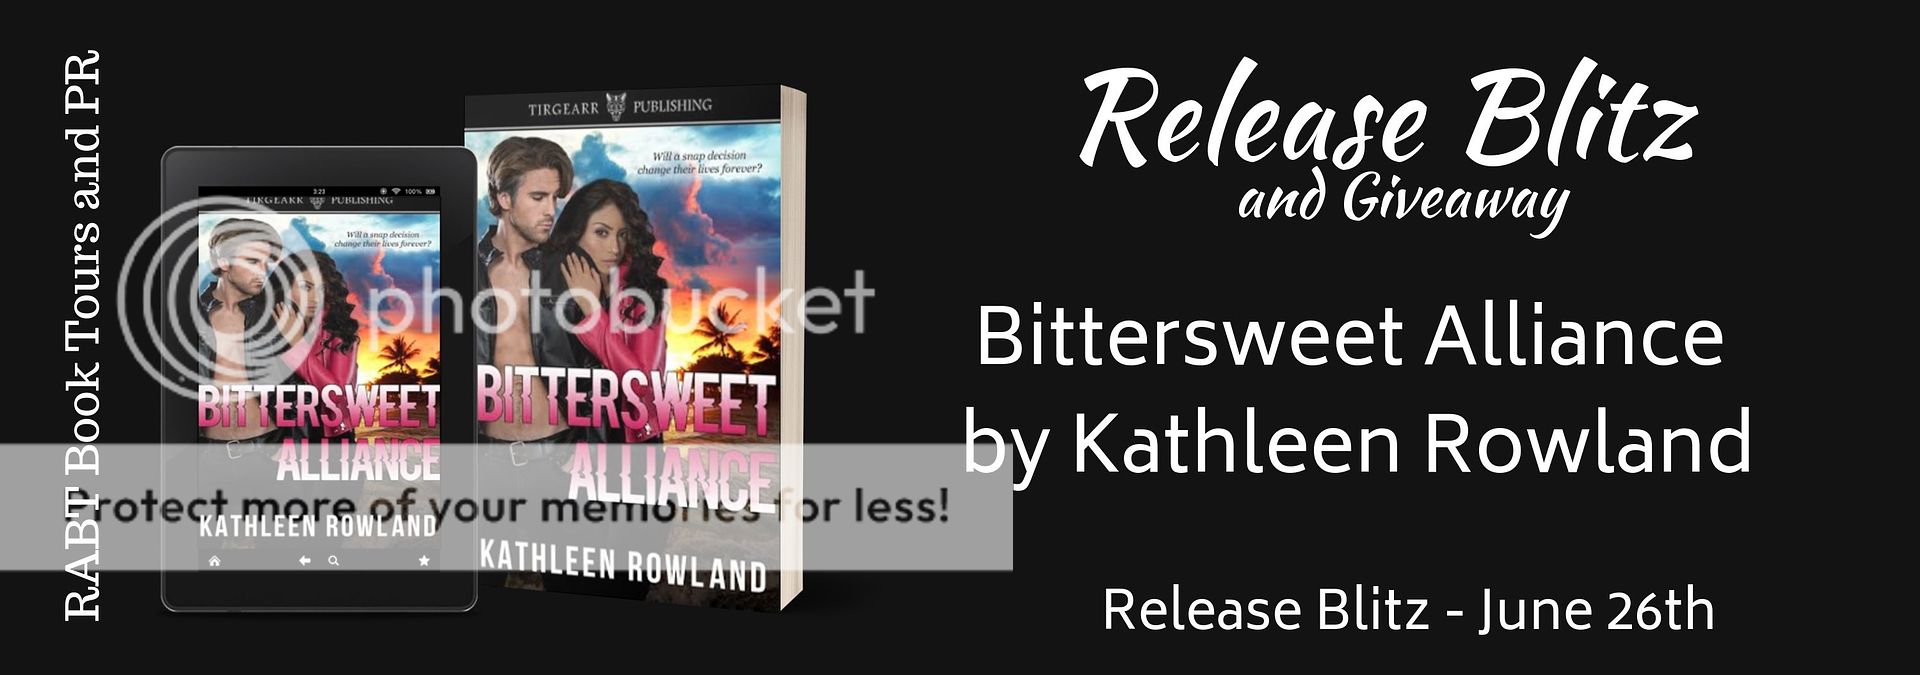 Release Blitz: Bittersweet Alliance by Kathleen Rowland @rowlandkathleen #romanticsuspense #releaseday #giveaway @RABTBookTours